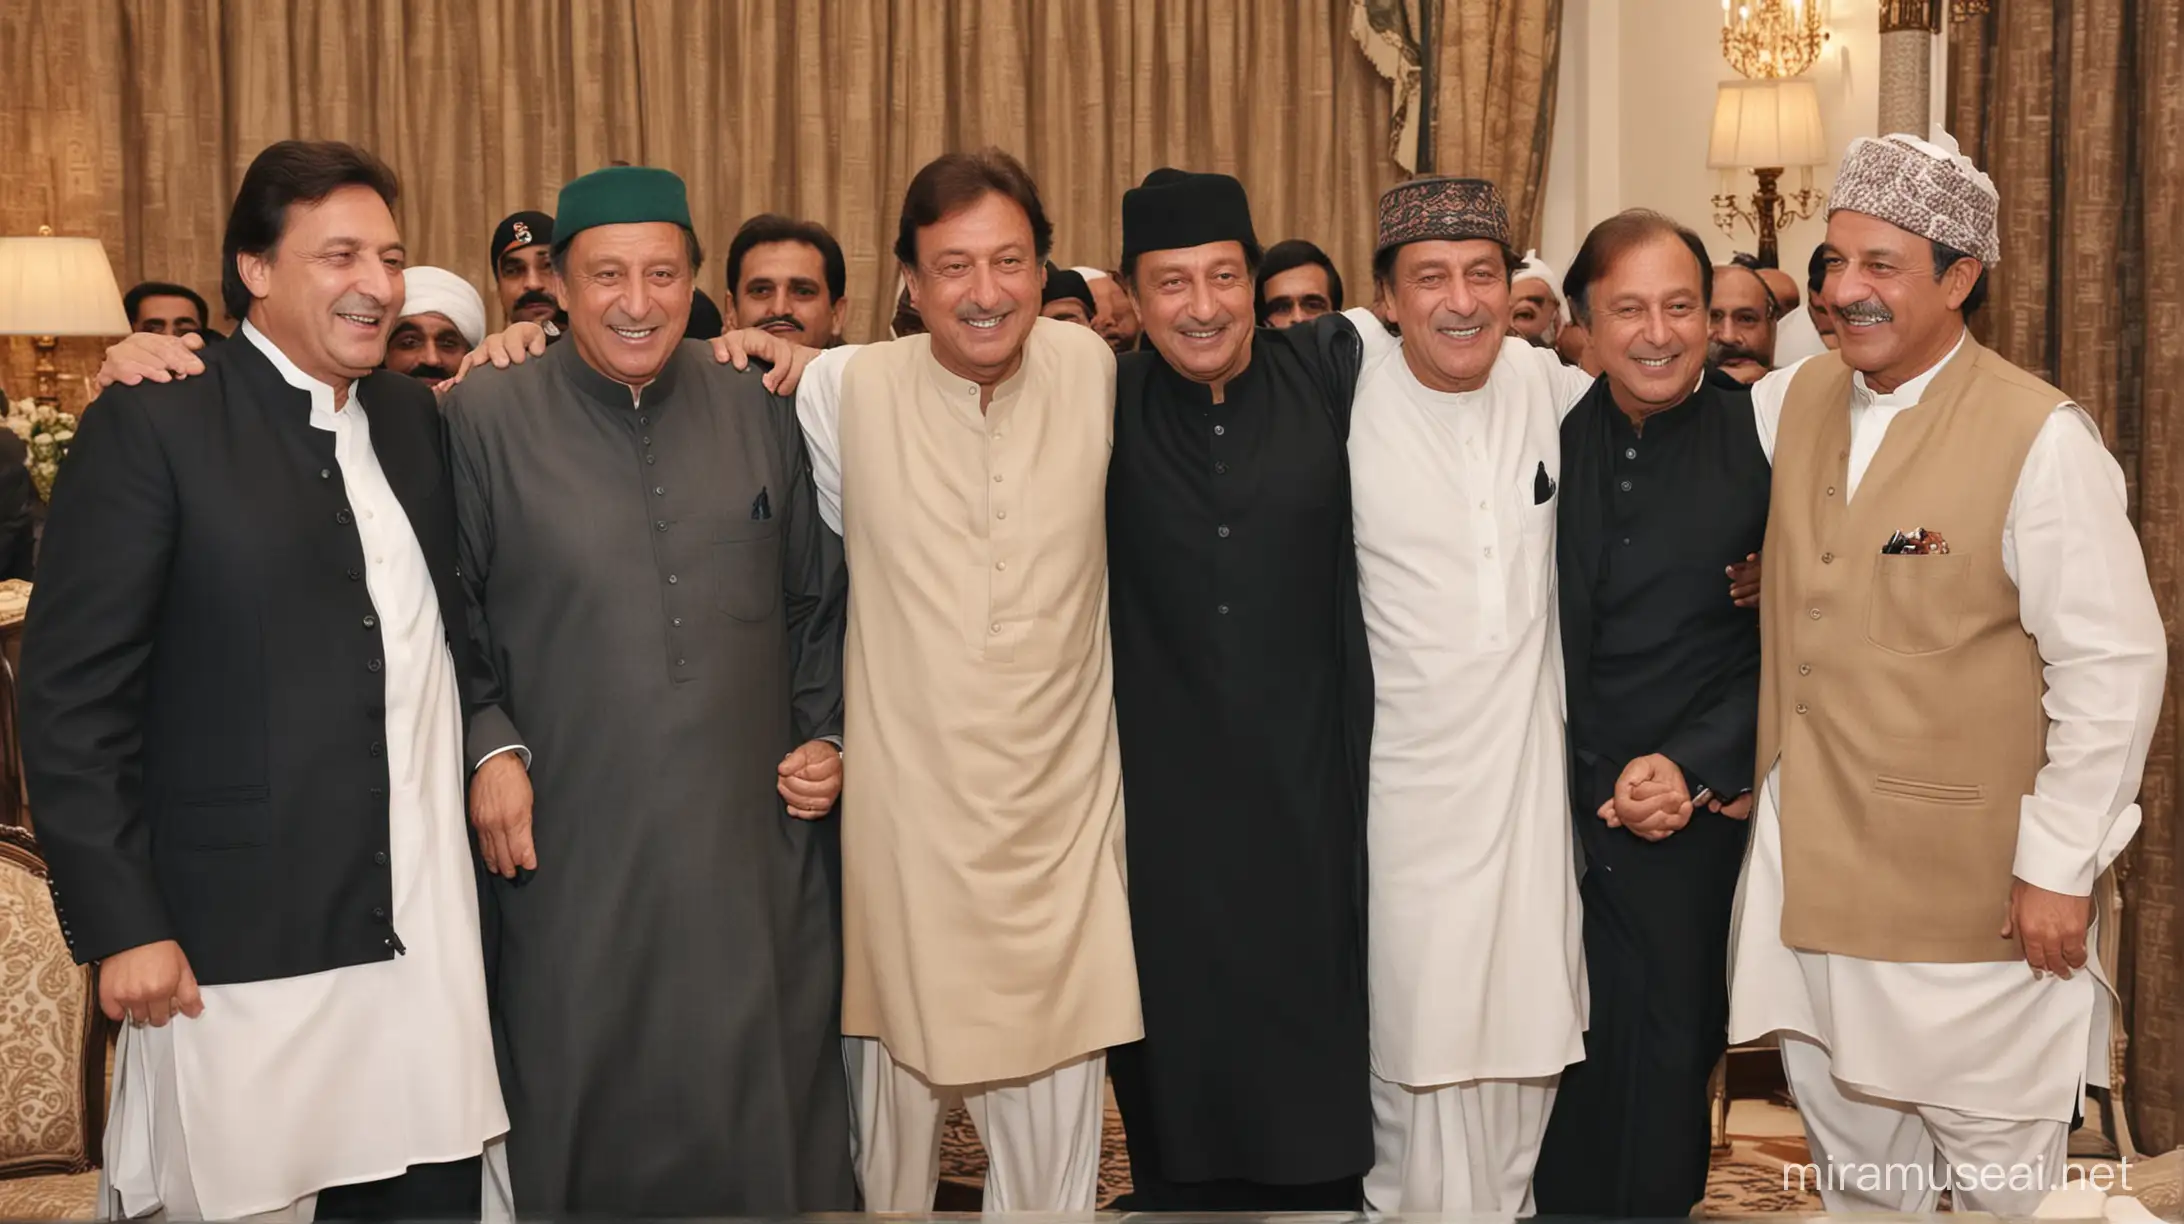 Army Chief of Pakistan General Asim Munir hugging former Prime Minister of Pakistan Imran Khan is celebrating Eid while Pakistan President Asif Ali Zardari, PML-N chief Mian Nawaz Sharif, Maulana Fazlur Rehman and Mohsin Naqvi are also standing and smiling.